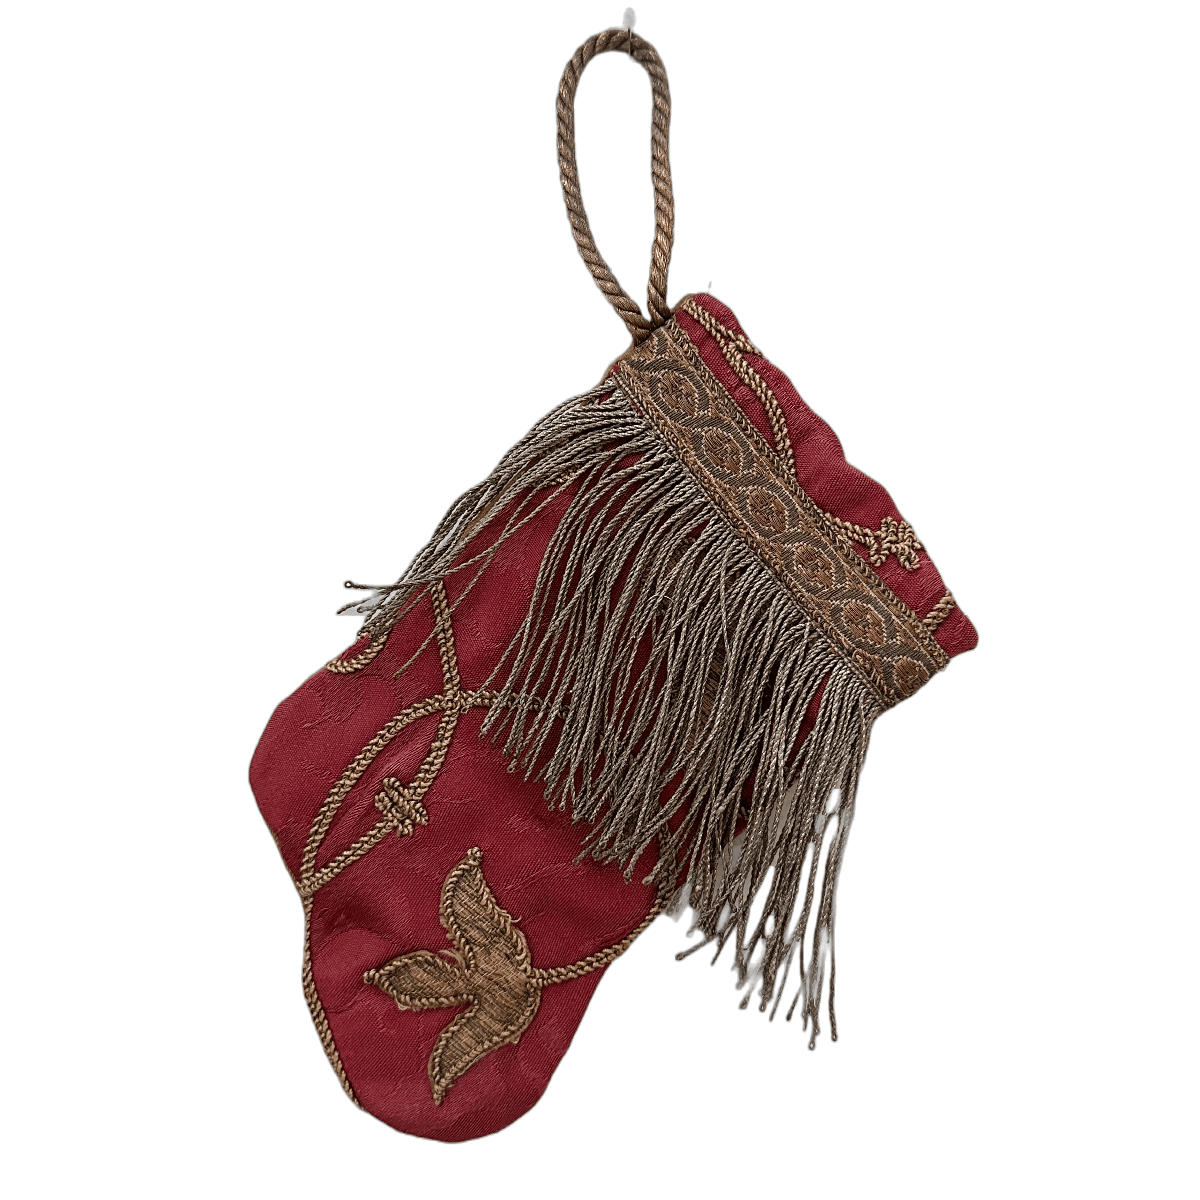 Handmade Mini Stocking Ornament from Antique & Vintage Textiles, Trims Ornament B. Viz Design D 